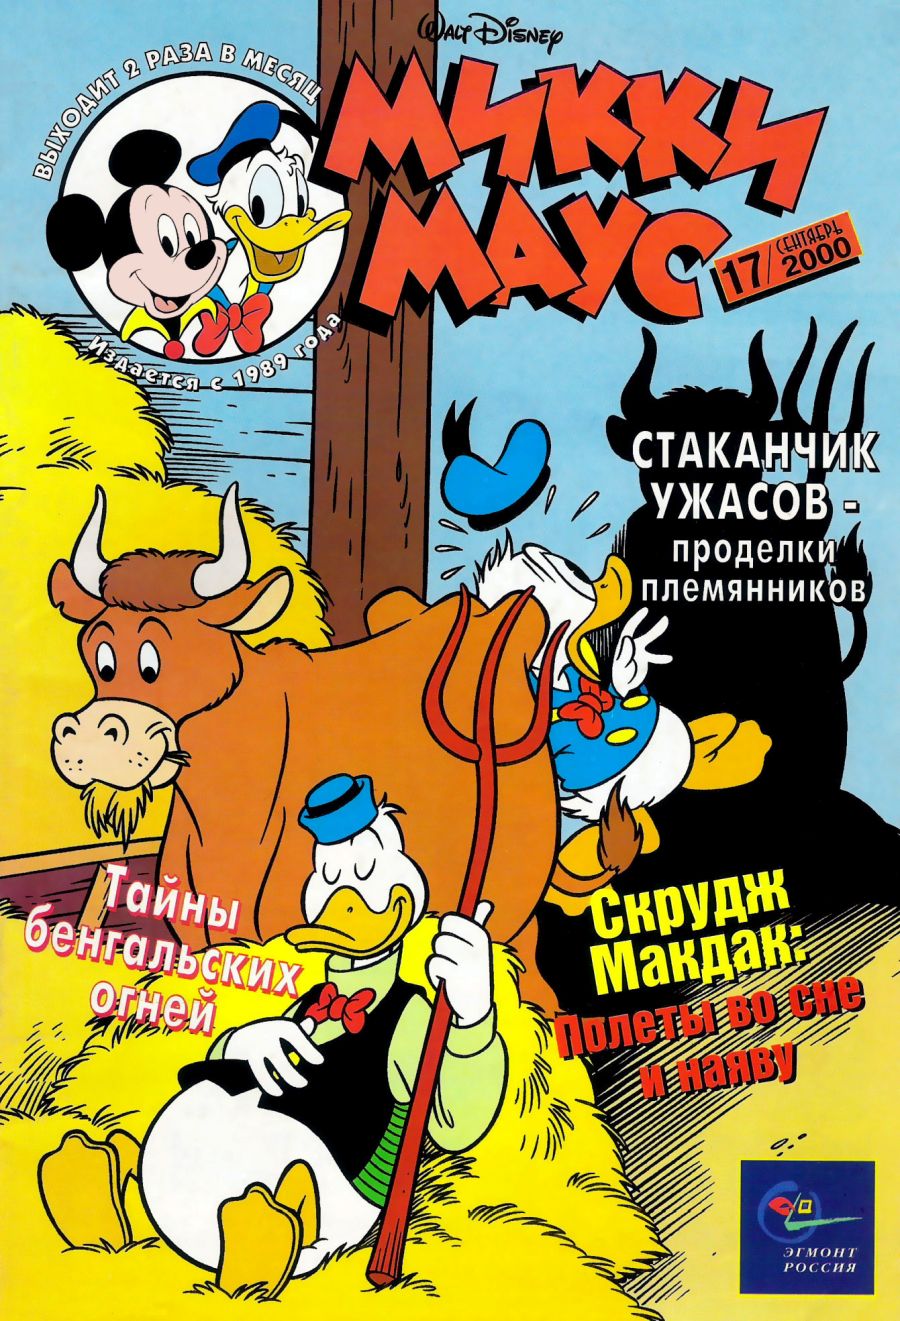 Комикс Микки Маус #17 2000